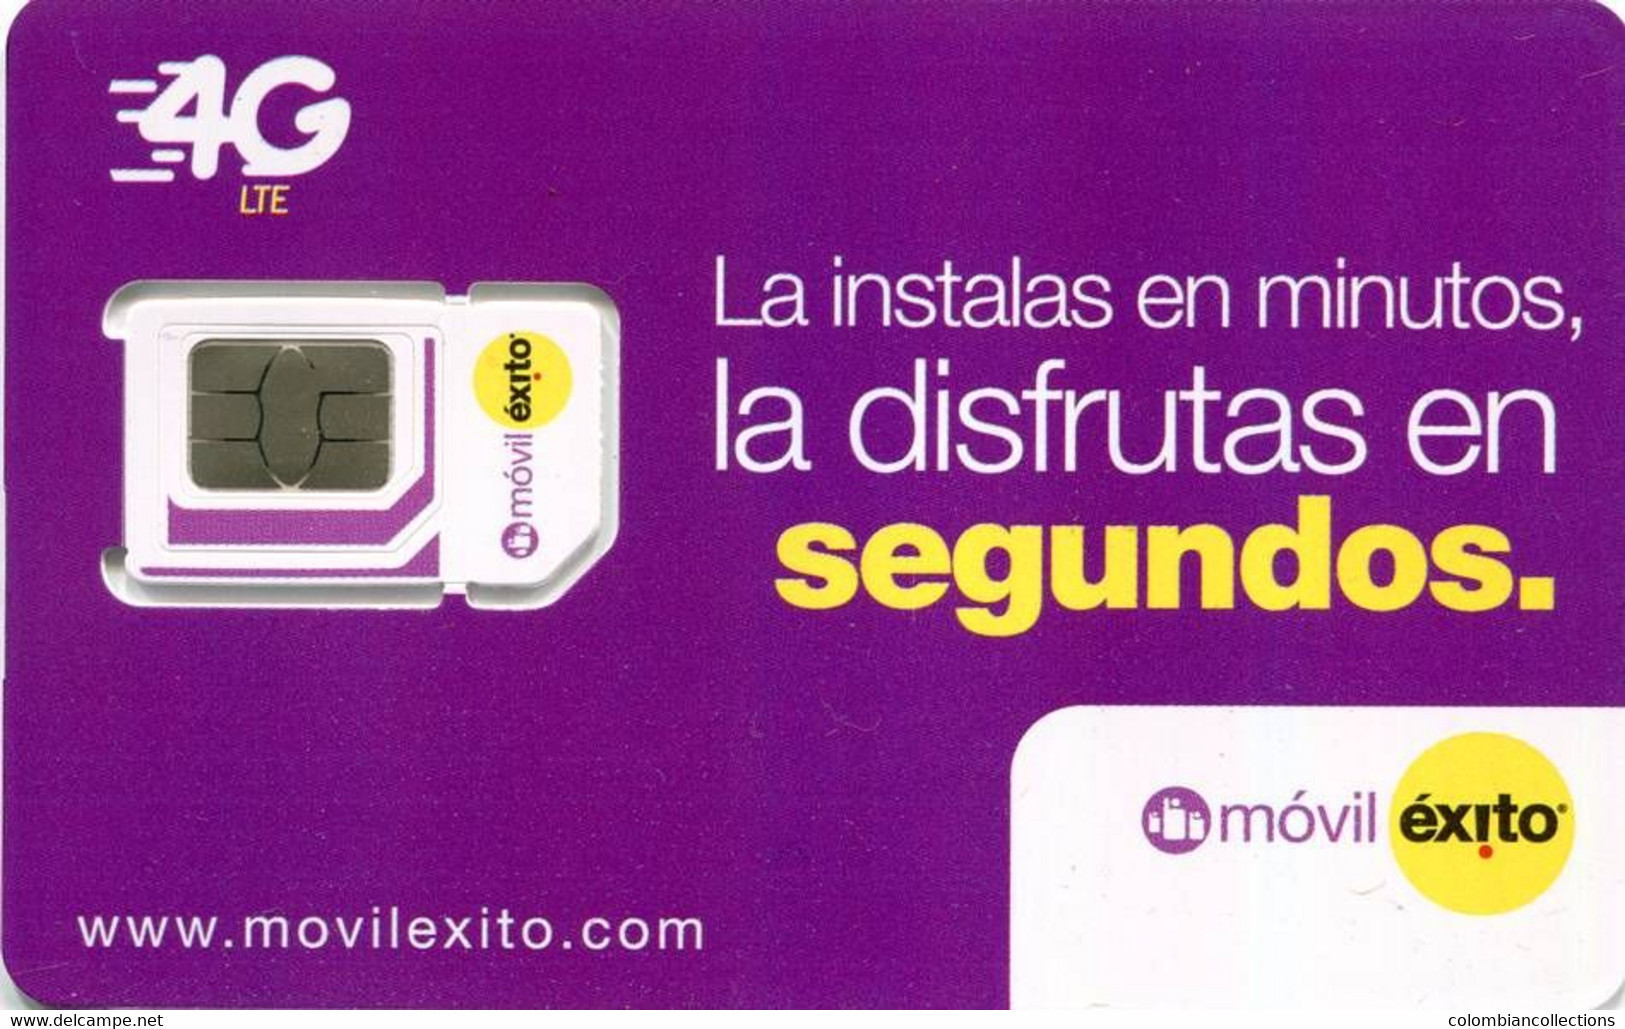 Lote TT241, Colombia, Tarjeta Telefonica, Phone Card, SIM Card Prepago, Movil Exito 4G Lite - Colombia